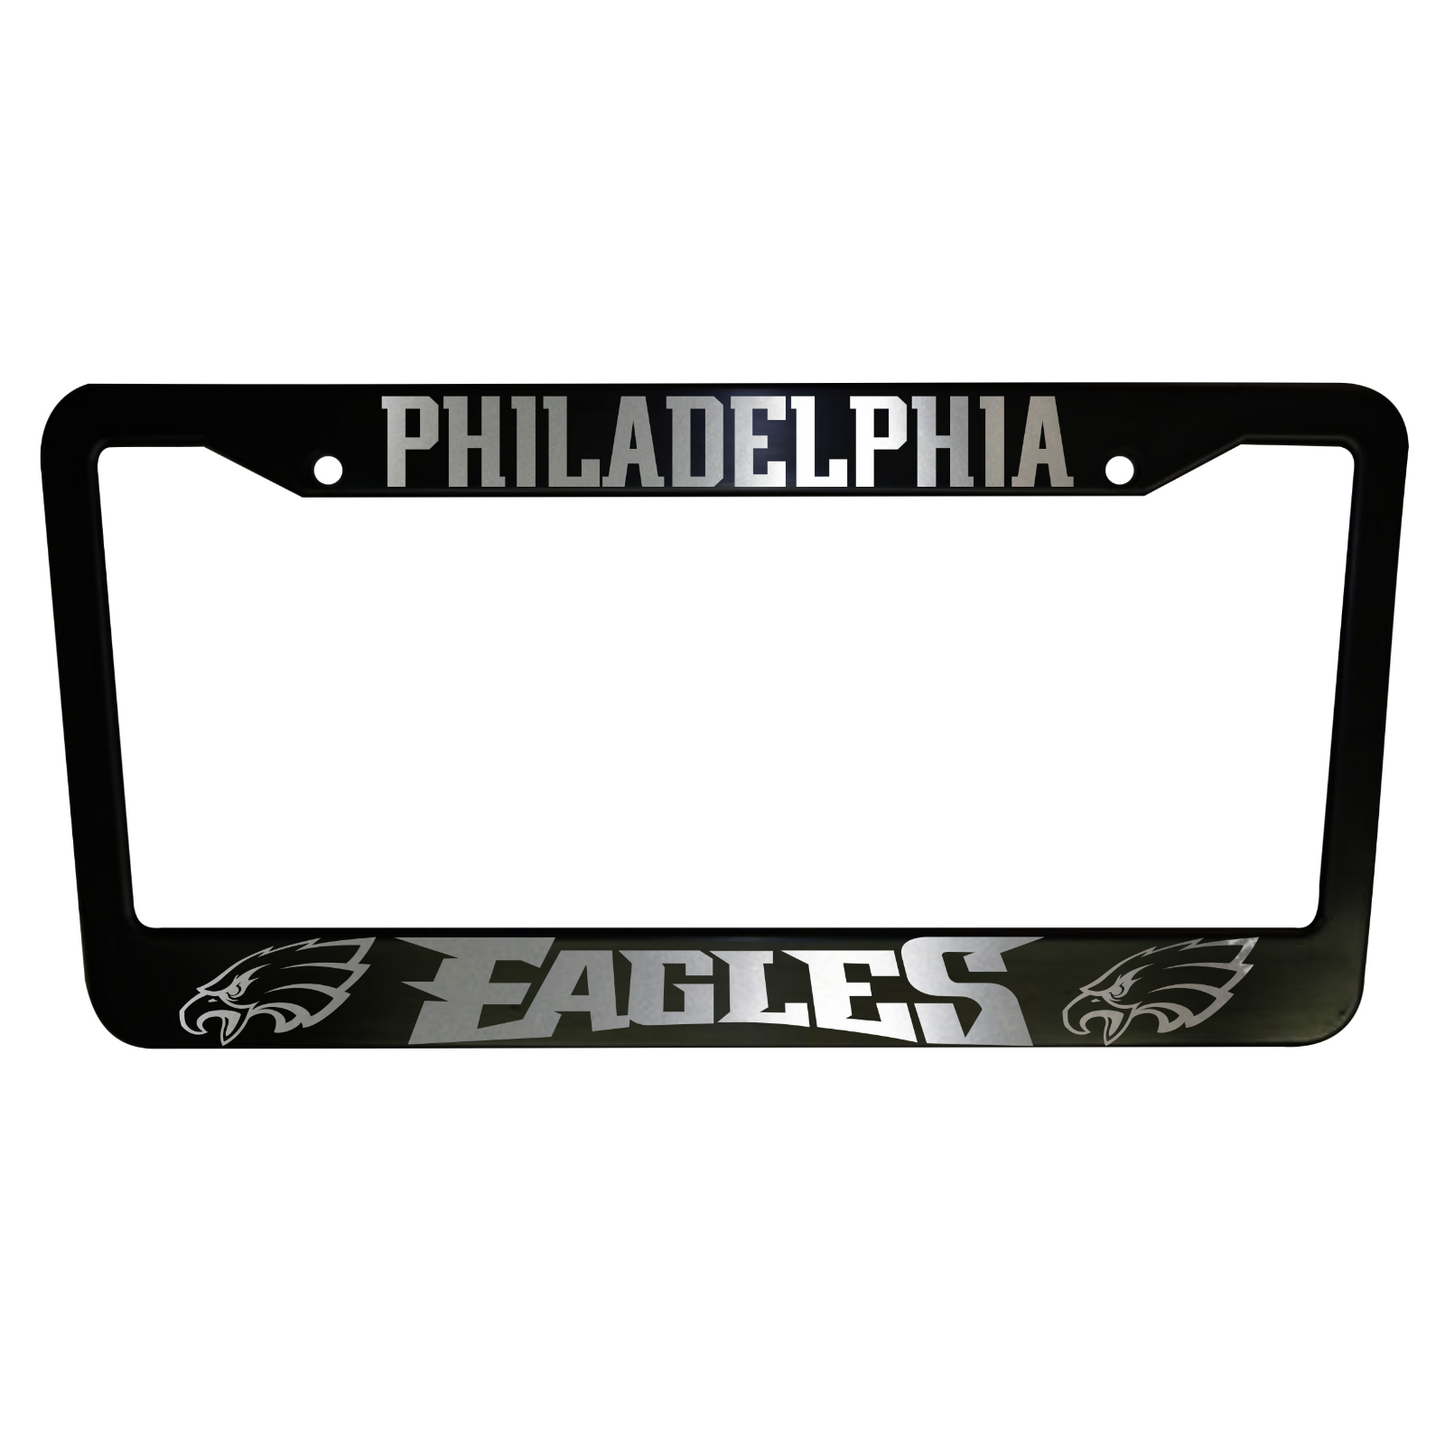 Set of 2 Philadelphia Eagles Car License Plate Frames Plastic or Aluminum Black Truck Parts Vehicle Accessories Auto Decor